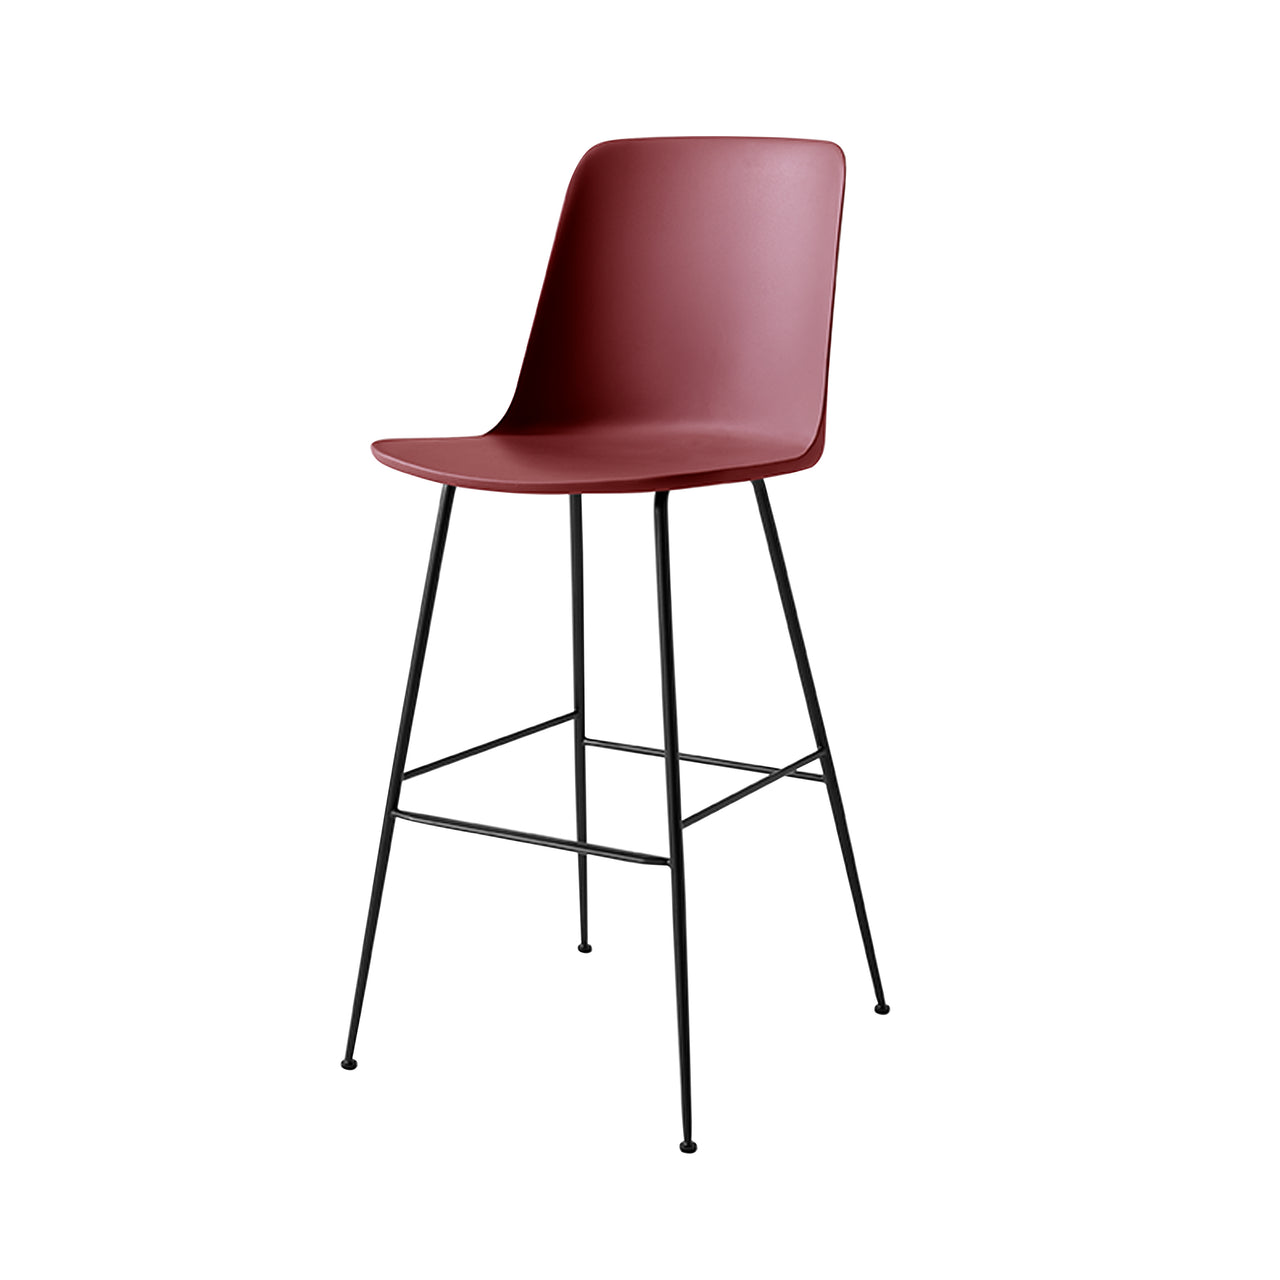 Rely Bar + Counter Highback Chair: HW91 + HW96 + Bar (HW96) + Red Brown + Black